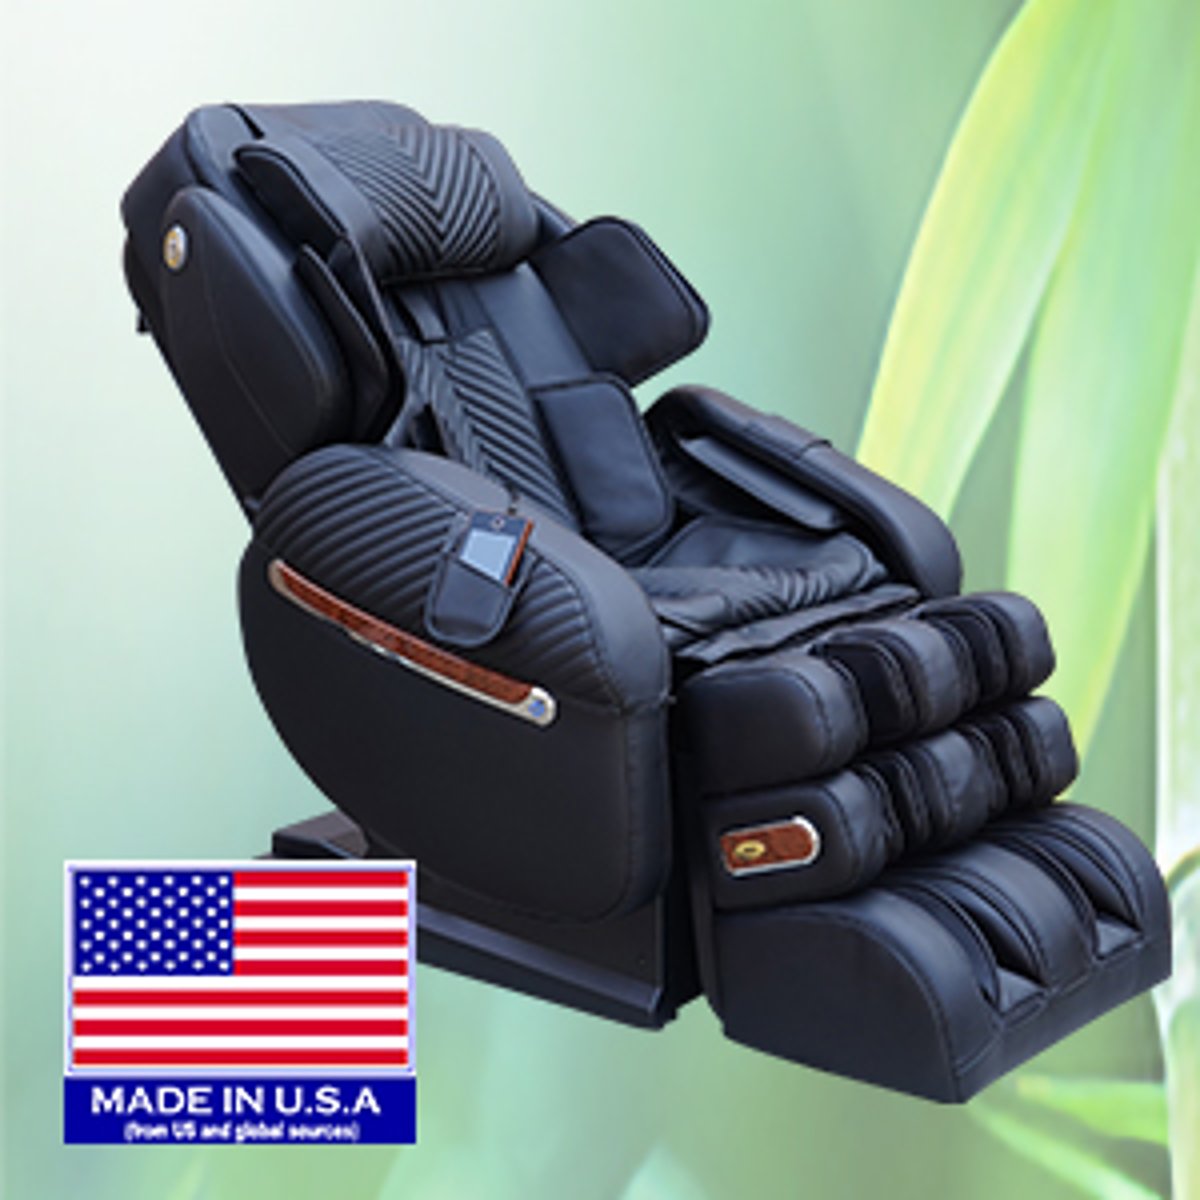 LURACO LEGEND PLUS L-TRACK MASSAGE CHAIR - Luraco Massage Chairs